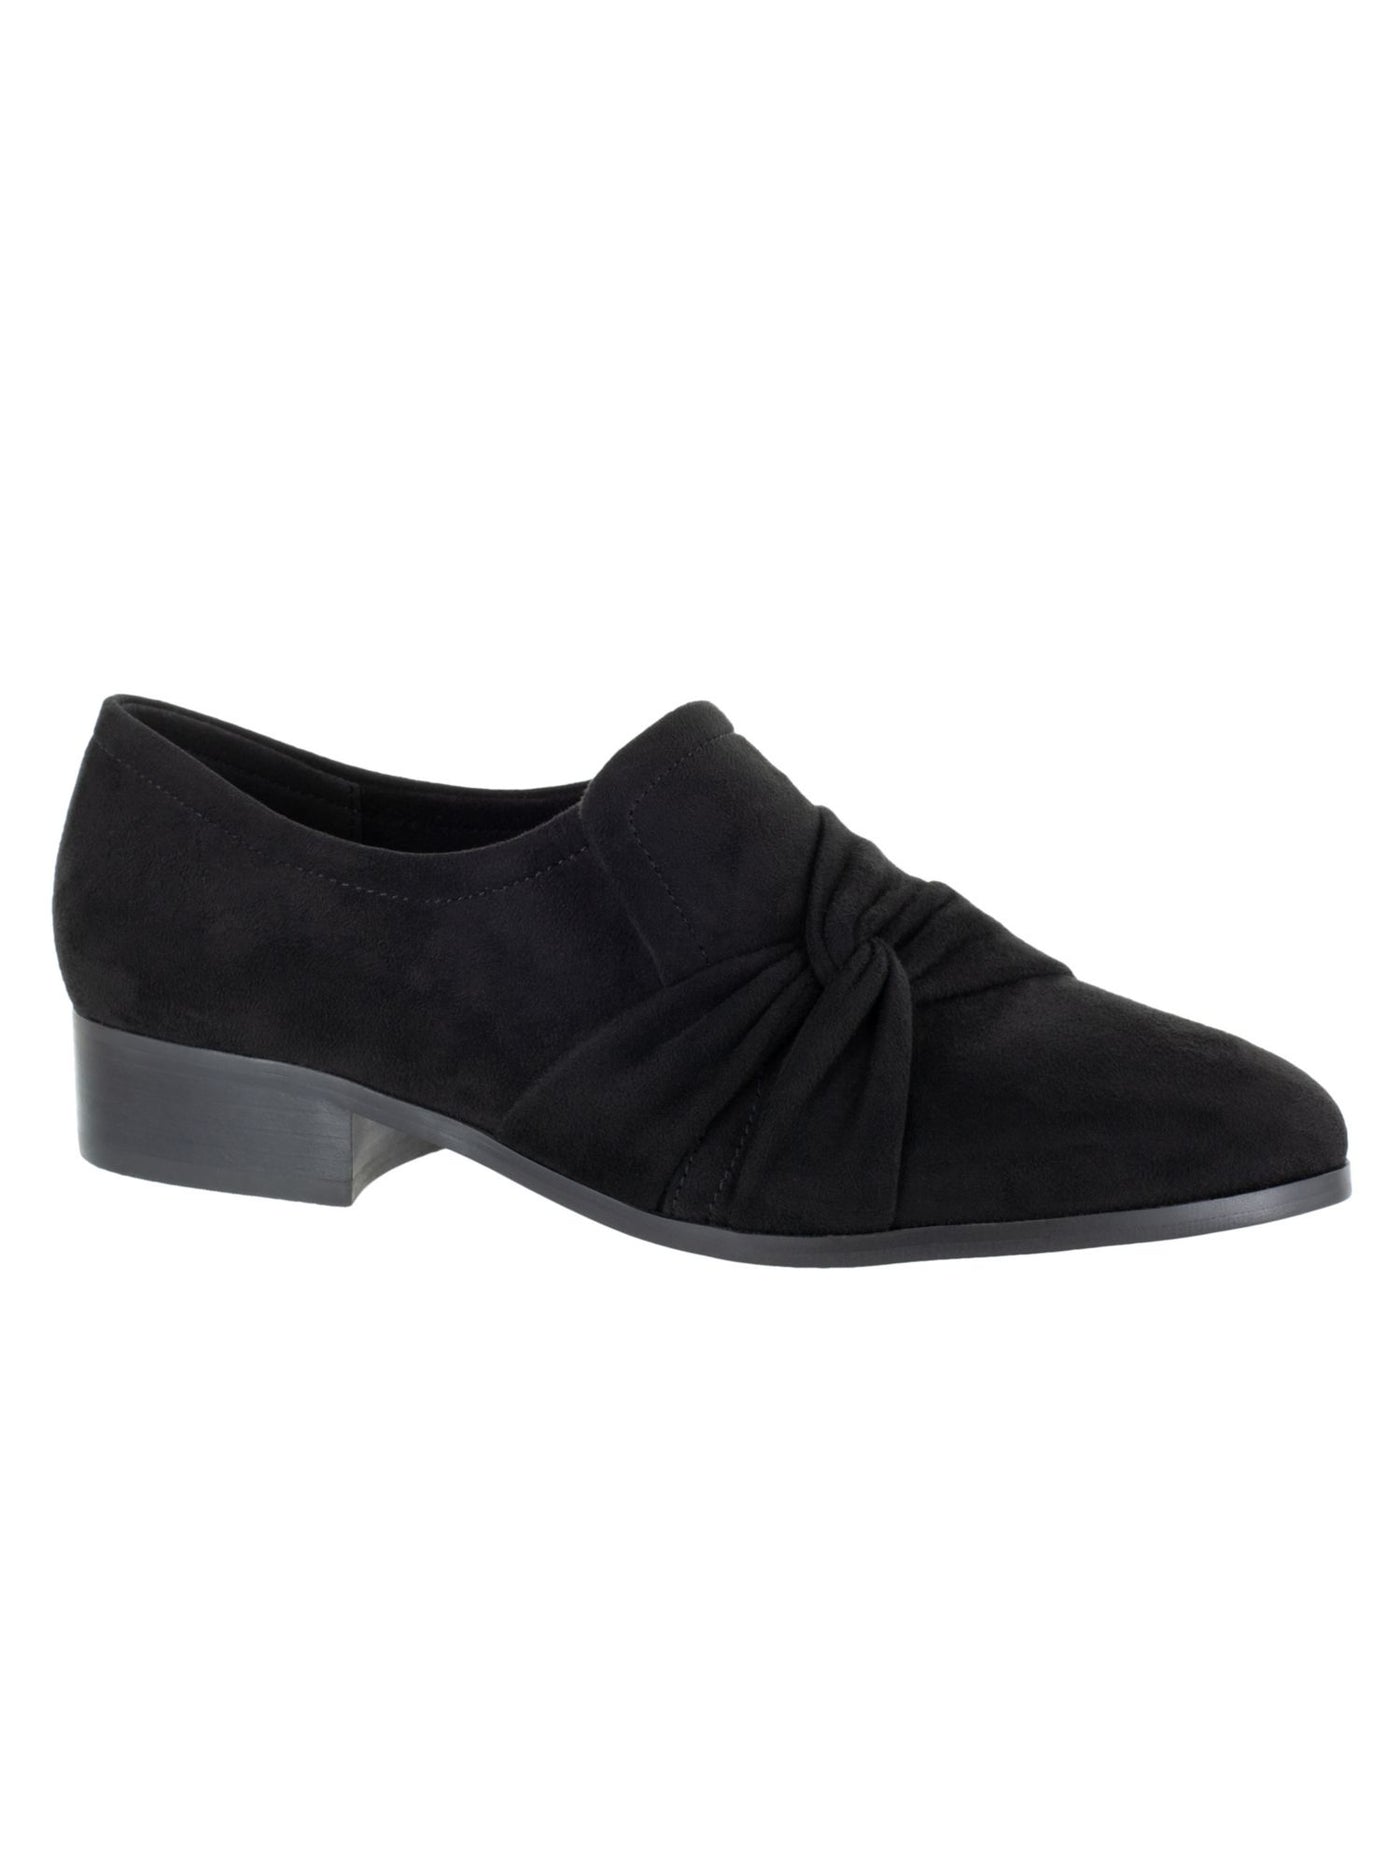 BELLA VITA Womens Black Twisted Detail Padded Comfort Billie Ii Almond Toe Block Heel Slip On Loafers Shoes 6.5 W